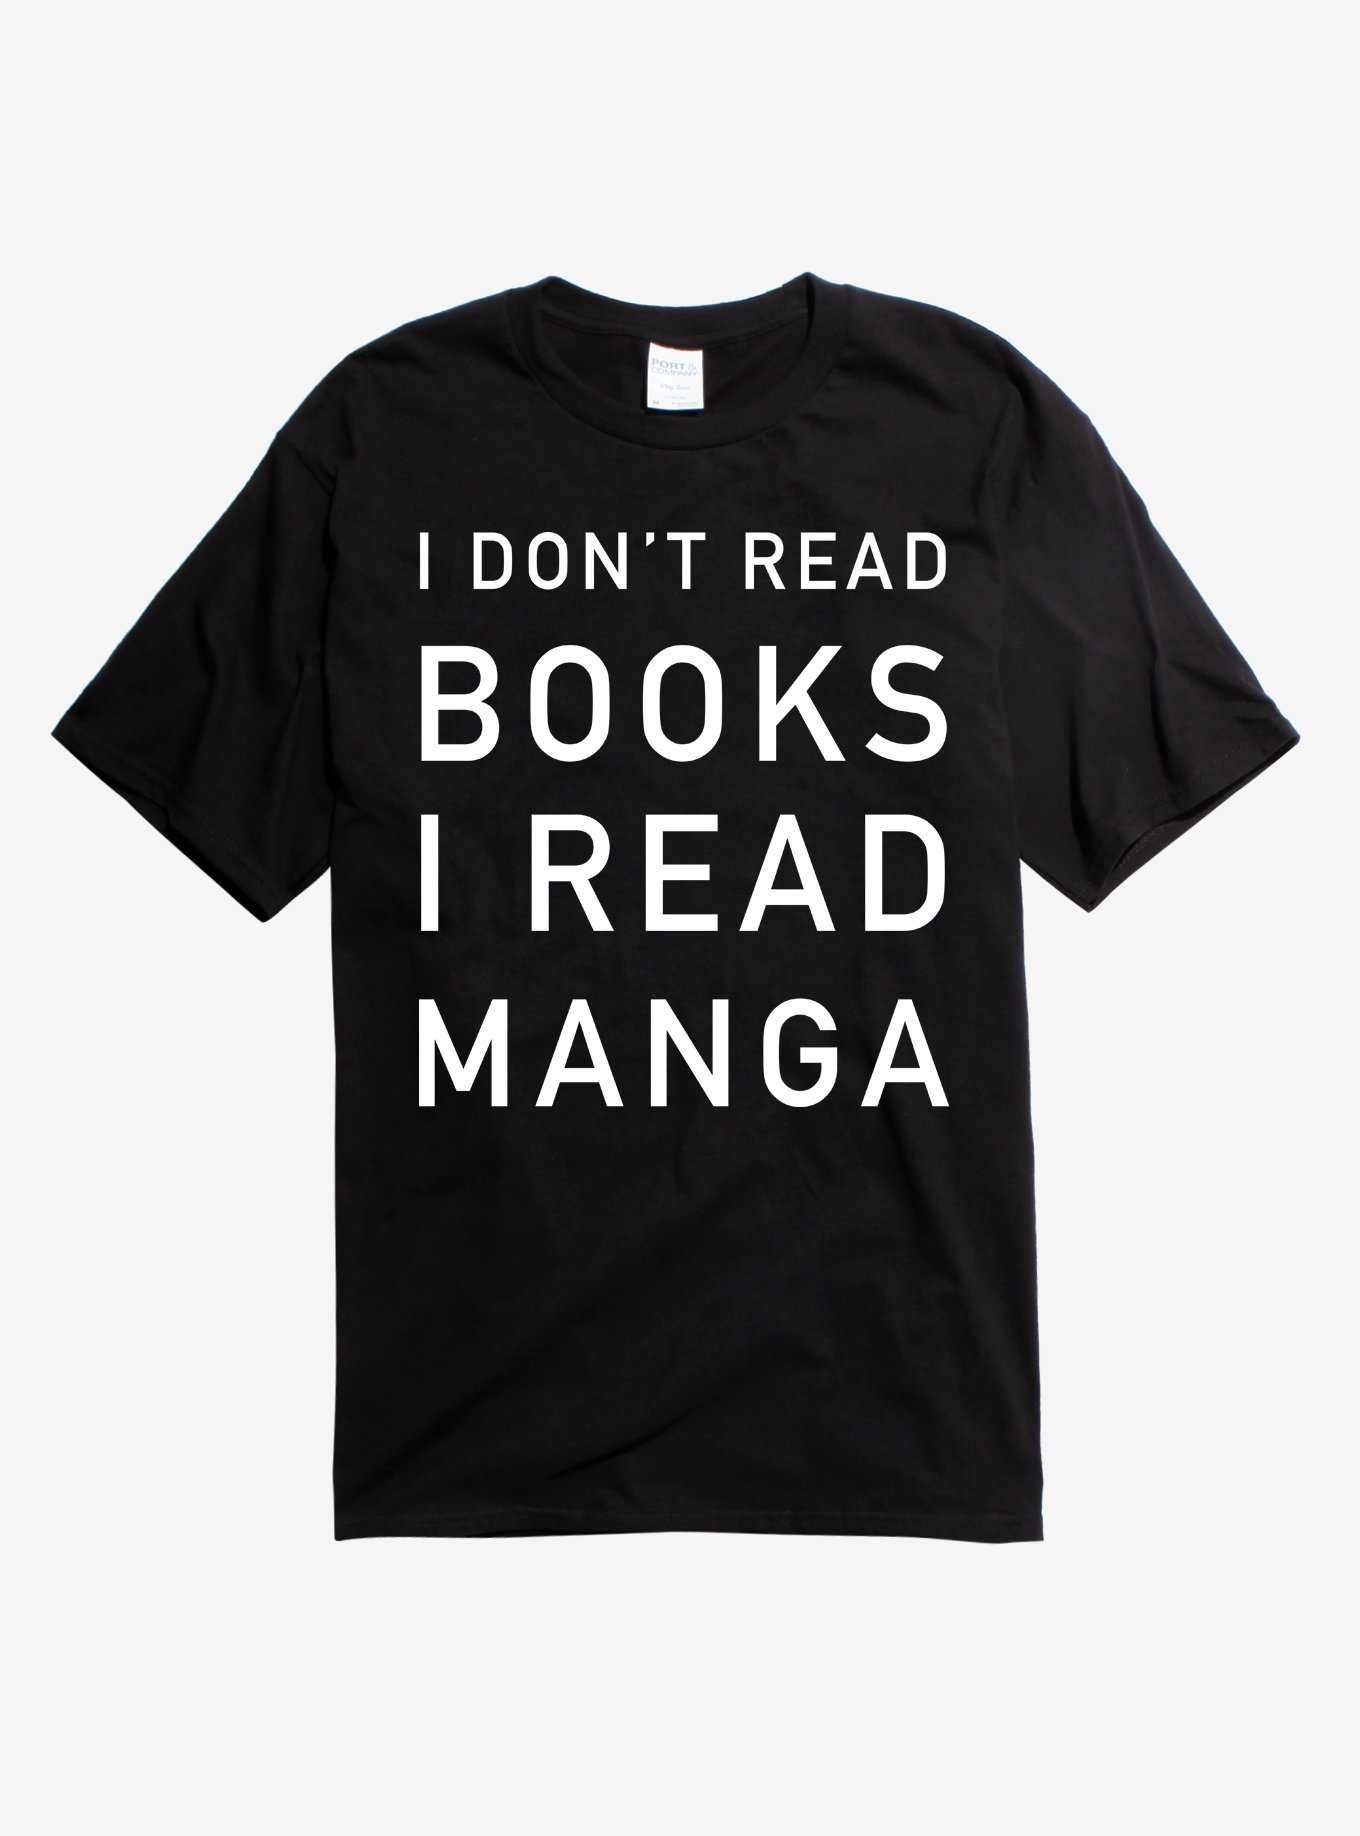 I Read Manga T-Shirt, , hi-res